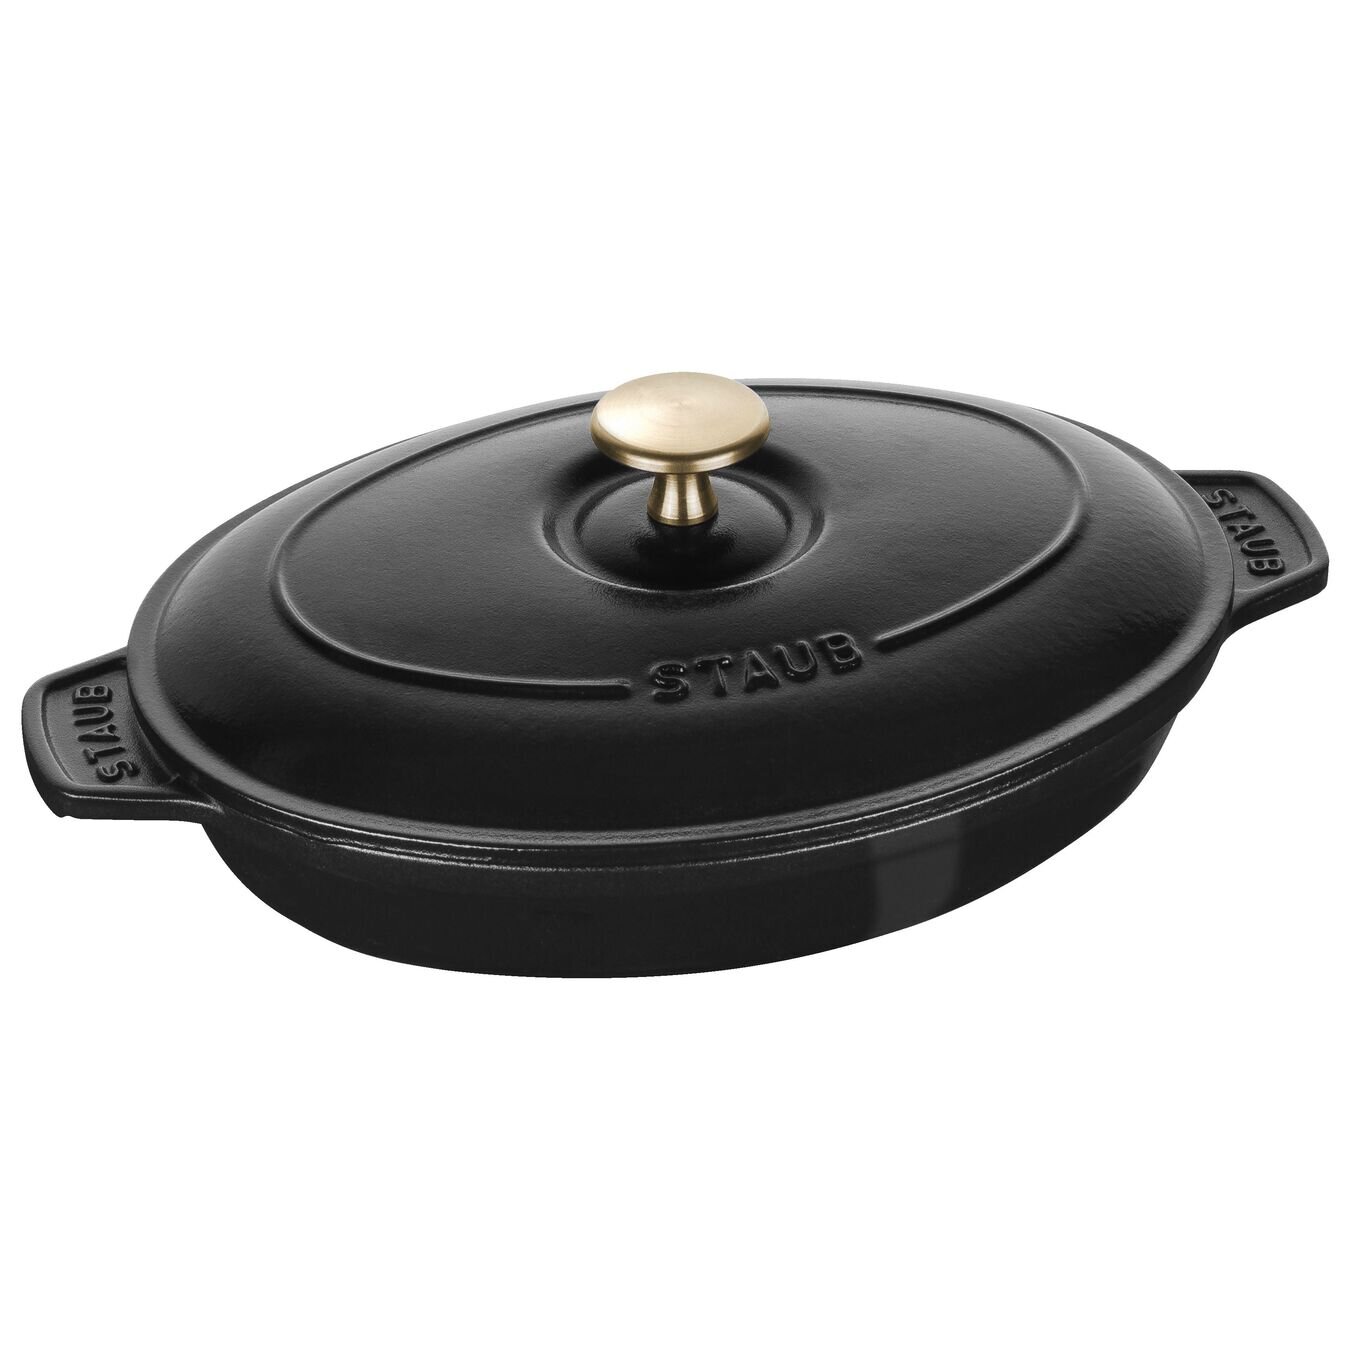 Staub - Double Handle Fry Pan, black matte, 13-inch